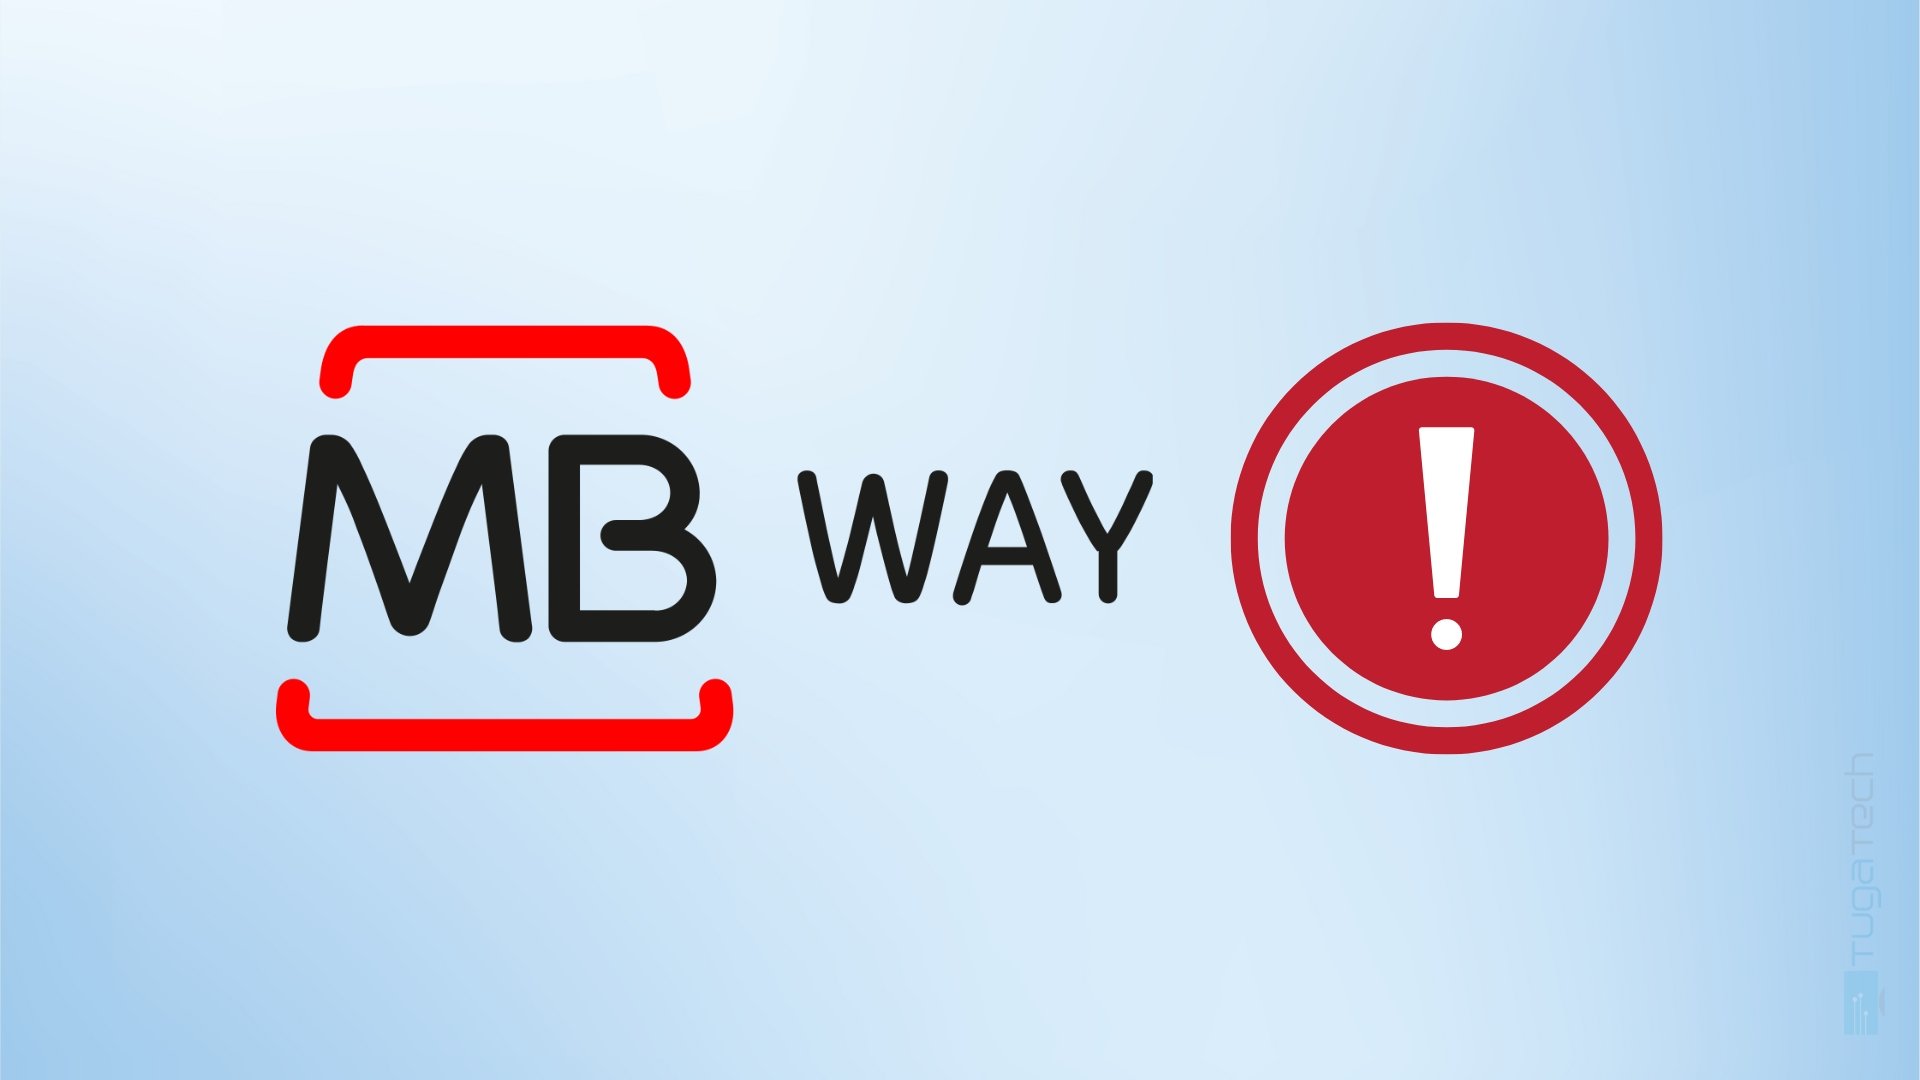 MBway alerta